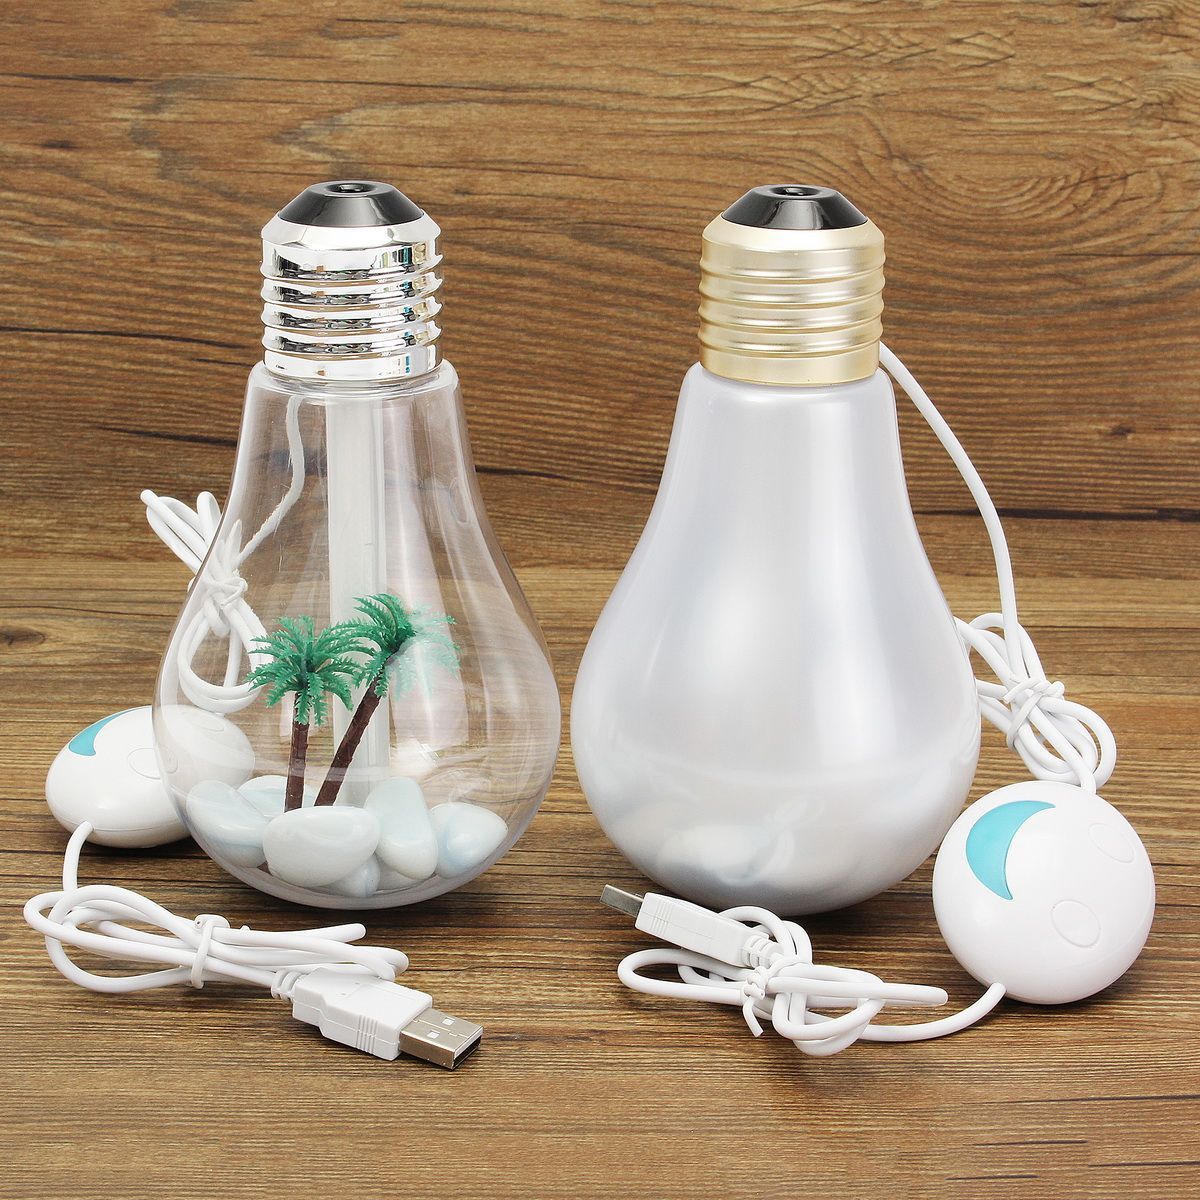 Portable-E27-LED-Bulb-Humidifier-Colorful-Lights-USB-Diffuser-Air-Purifier-Gift-1122088